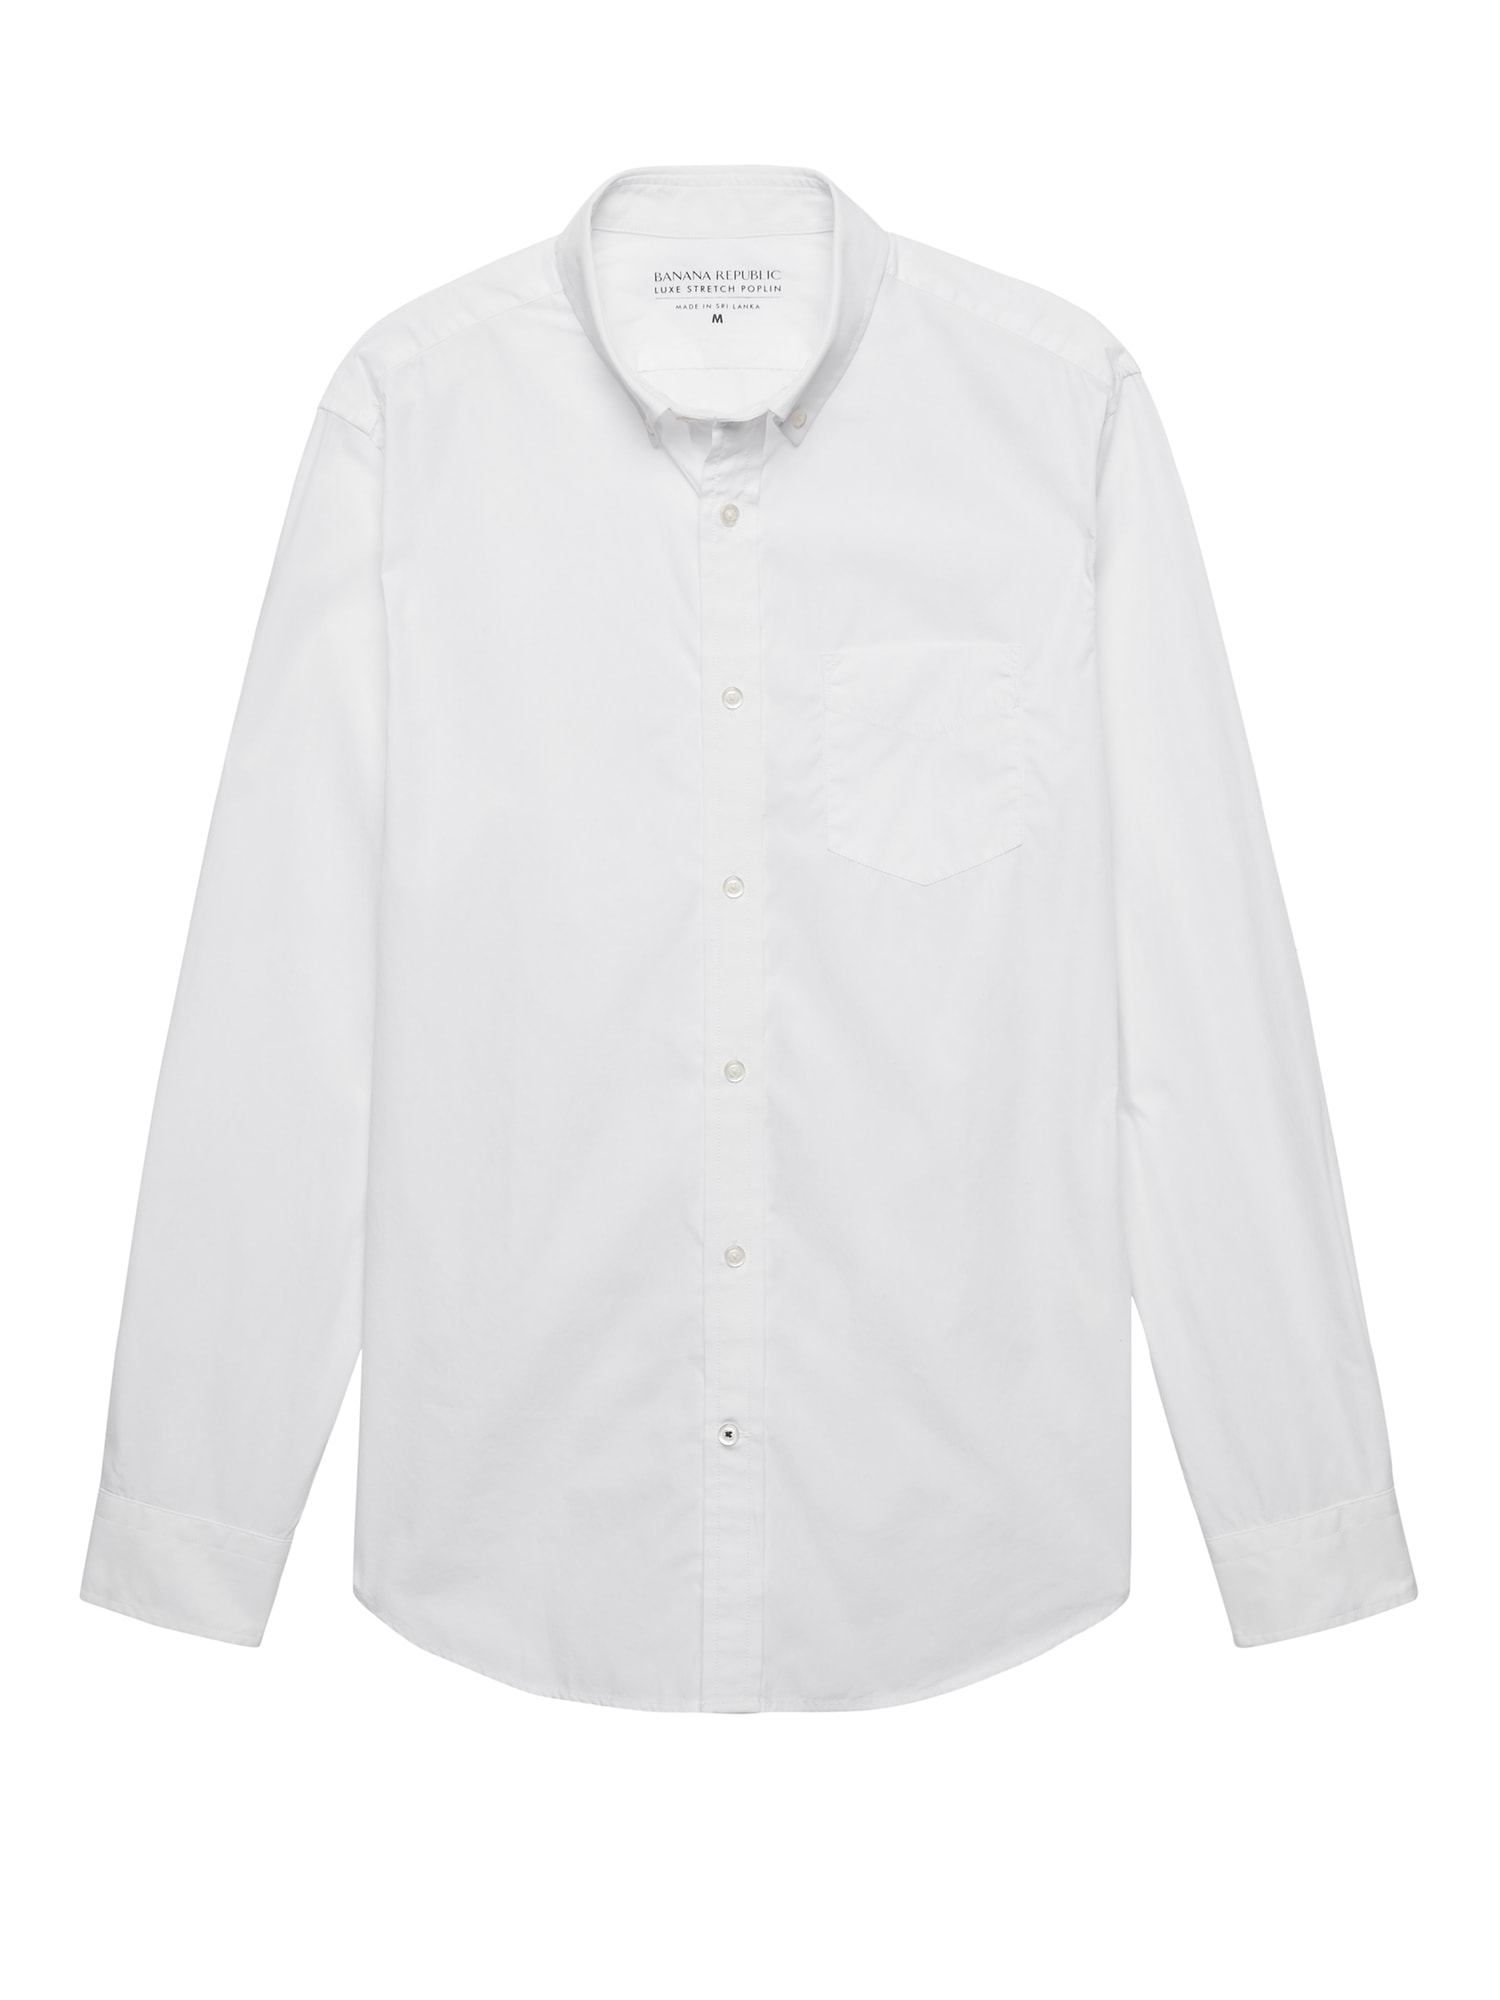 Standard-Fit Luxe Poplin Shirt